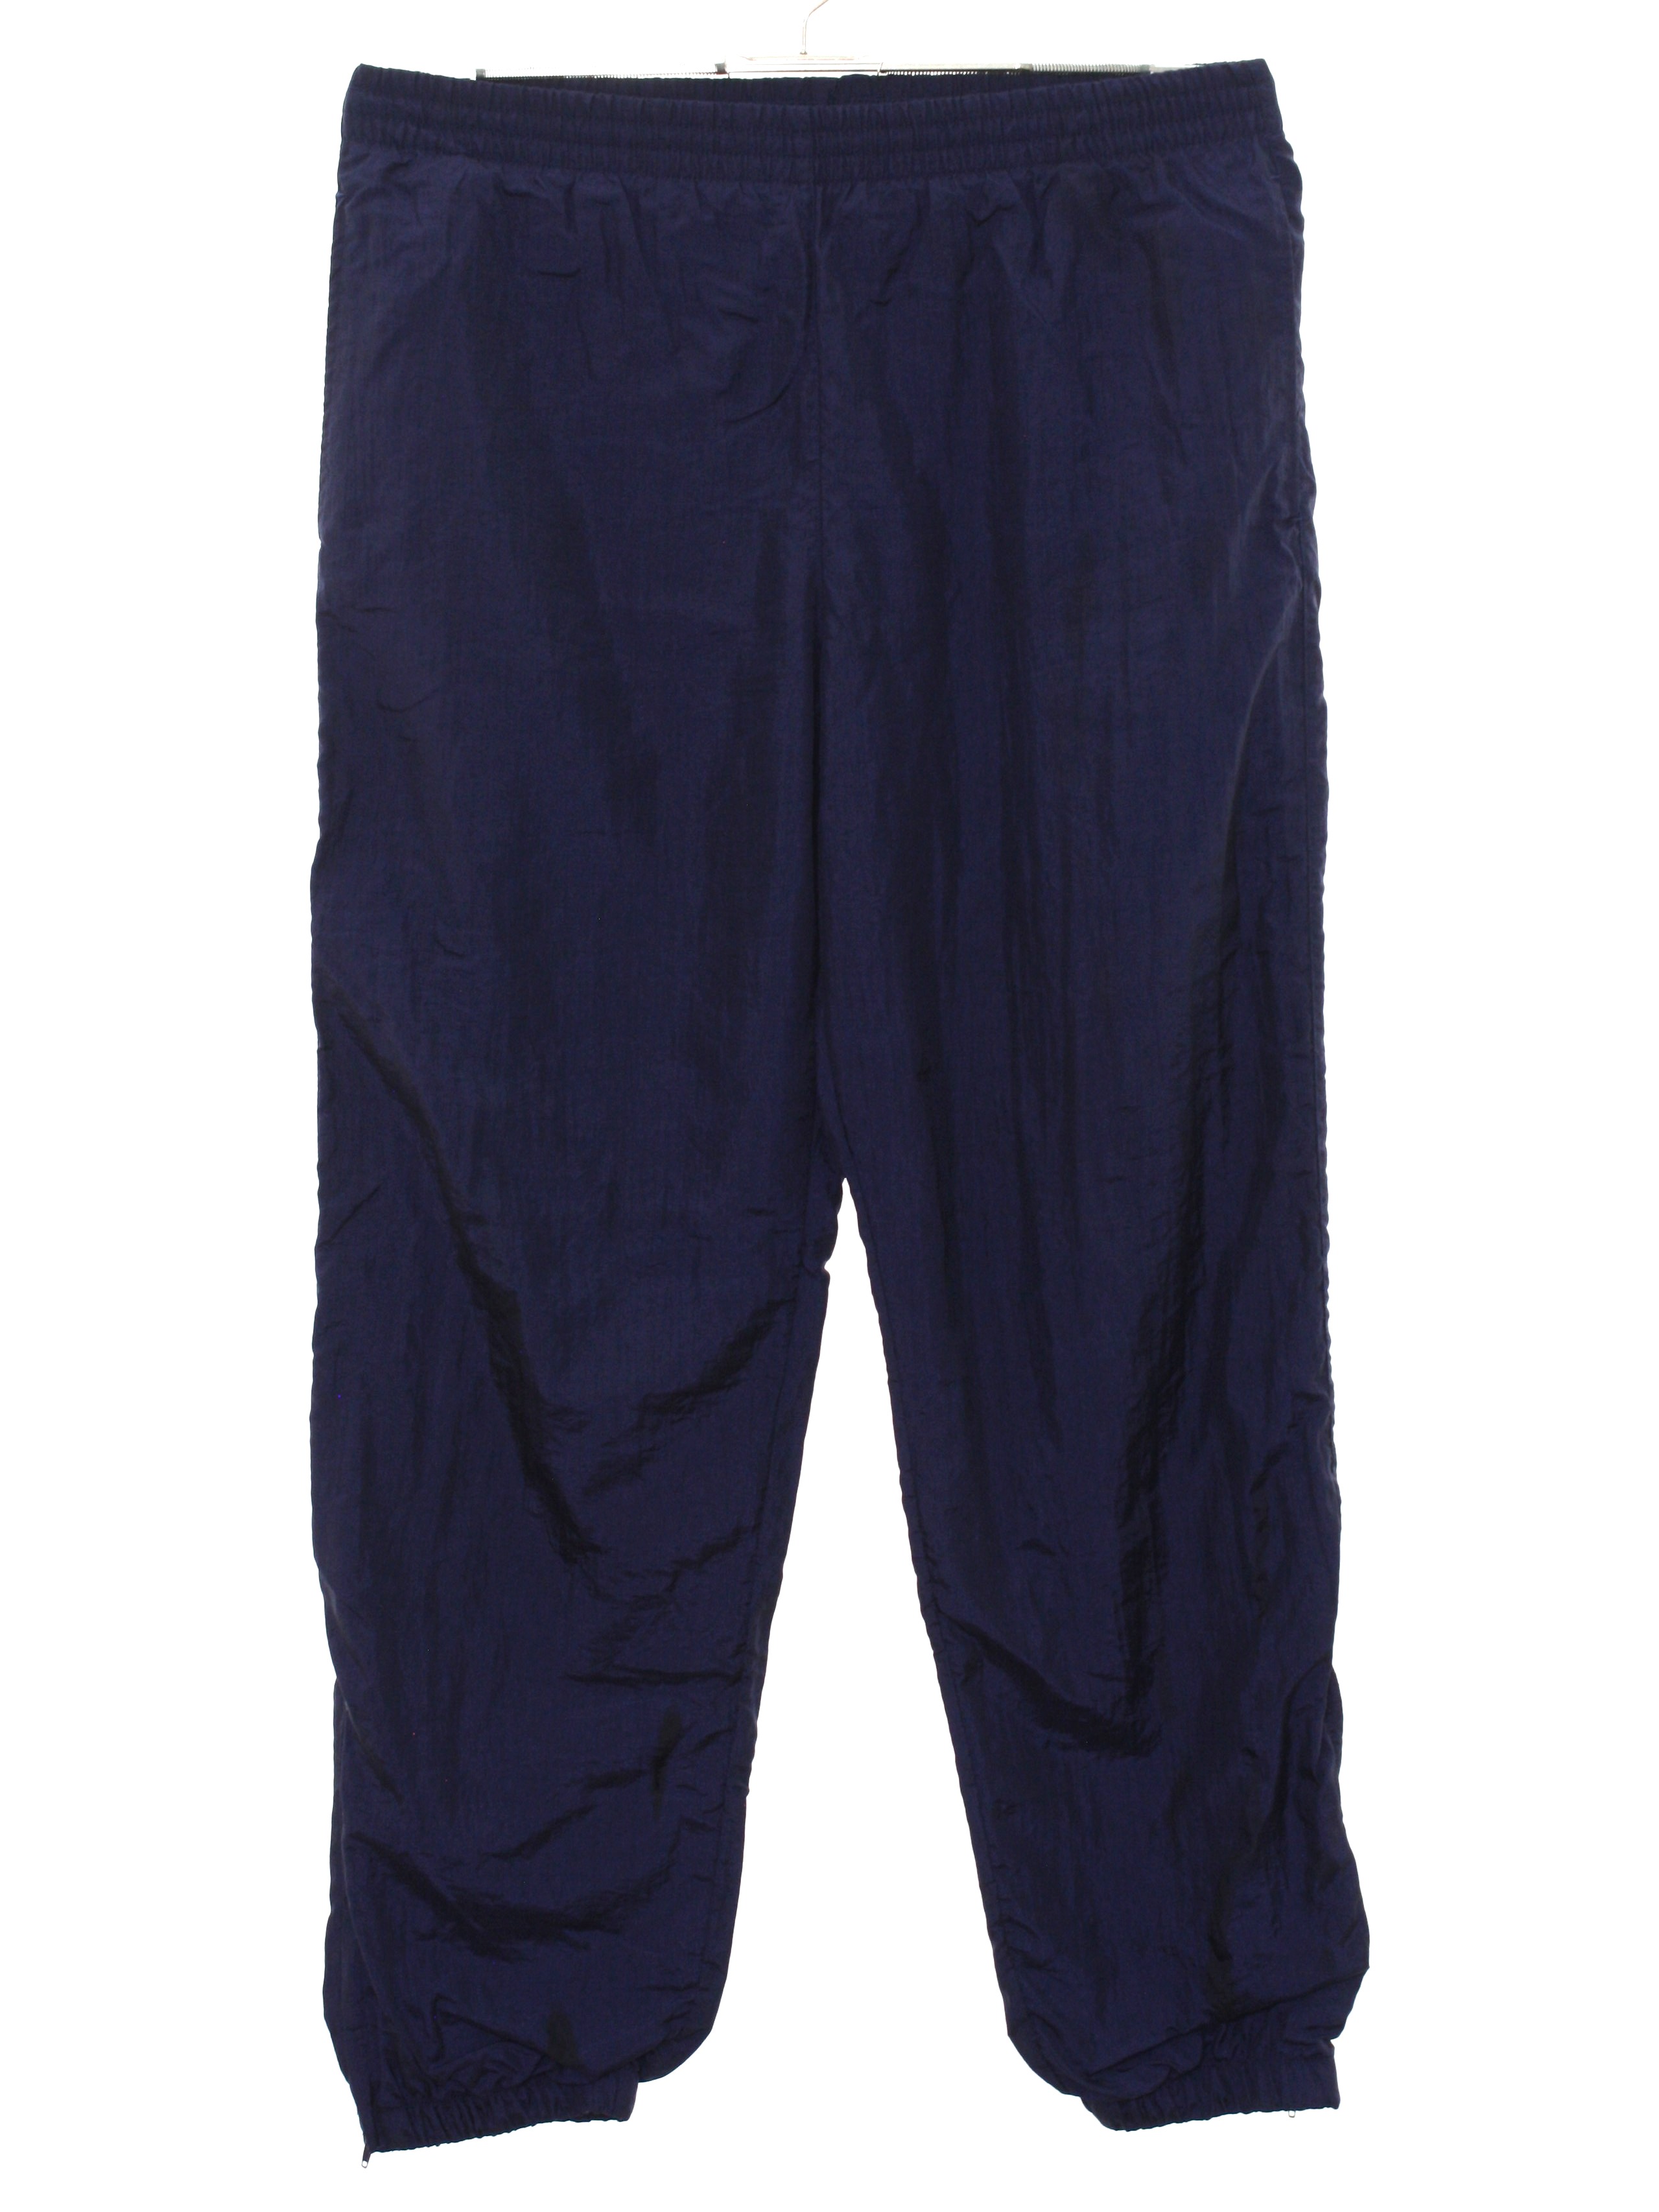 Eighties Vintage Pants: 80s -Care Label- Unisex navy blue nylon track ...